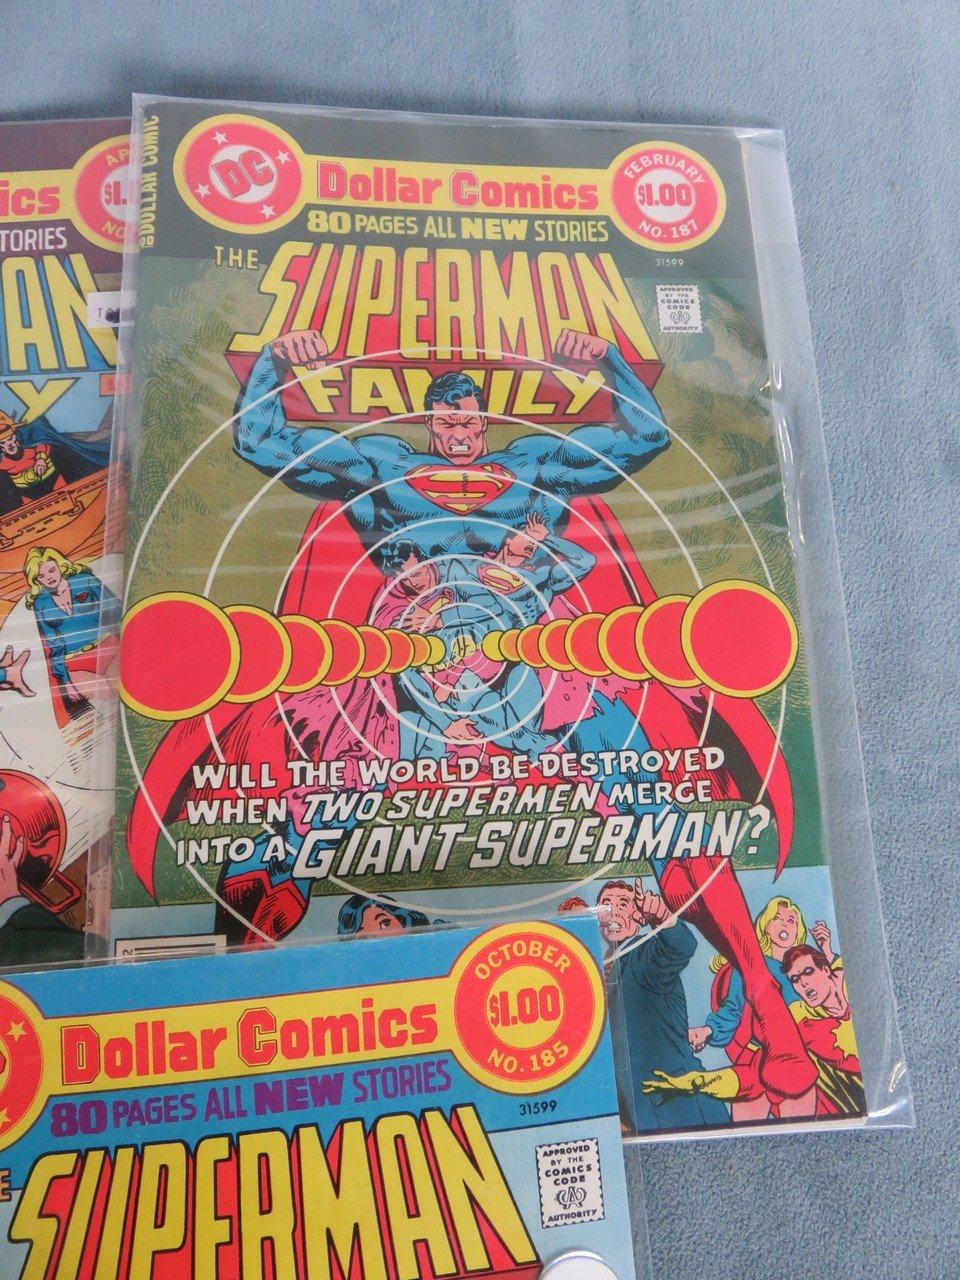 Superman Family #185-189 Run of (5)